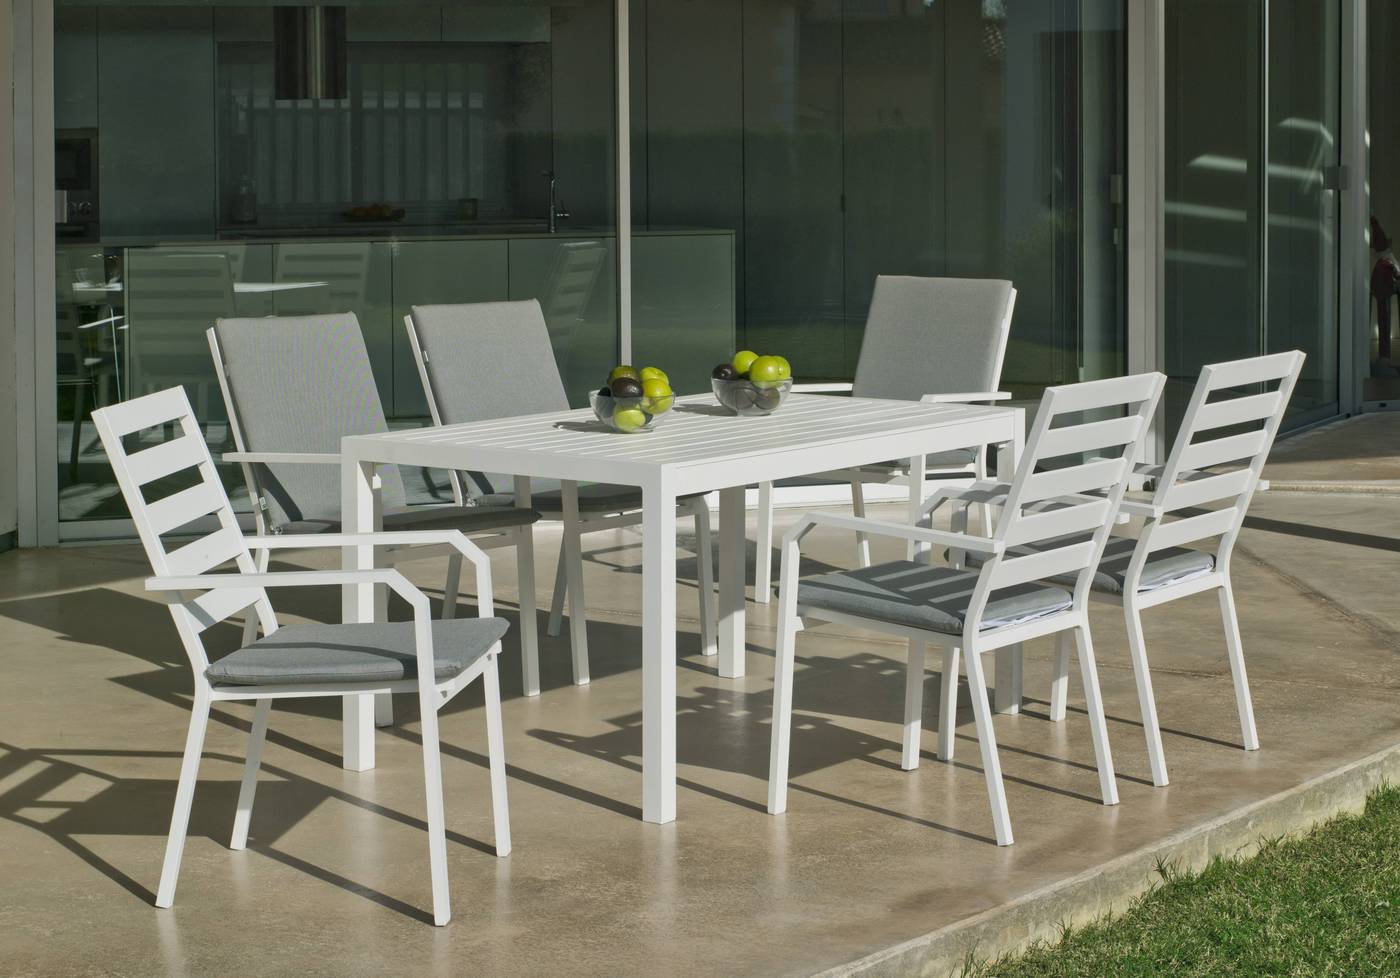 Conjunto aluminio luxe: Mesa rectangular 150 cm + 6 sillones. Disponible en color blanco, plata, bronce, antracita y champagne.